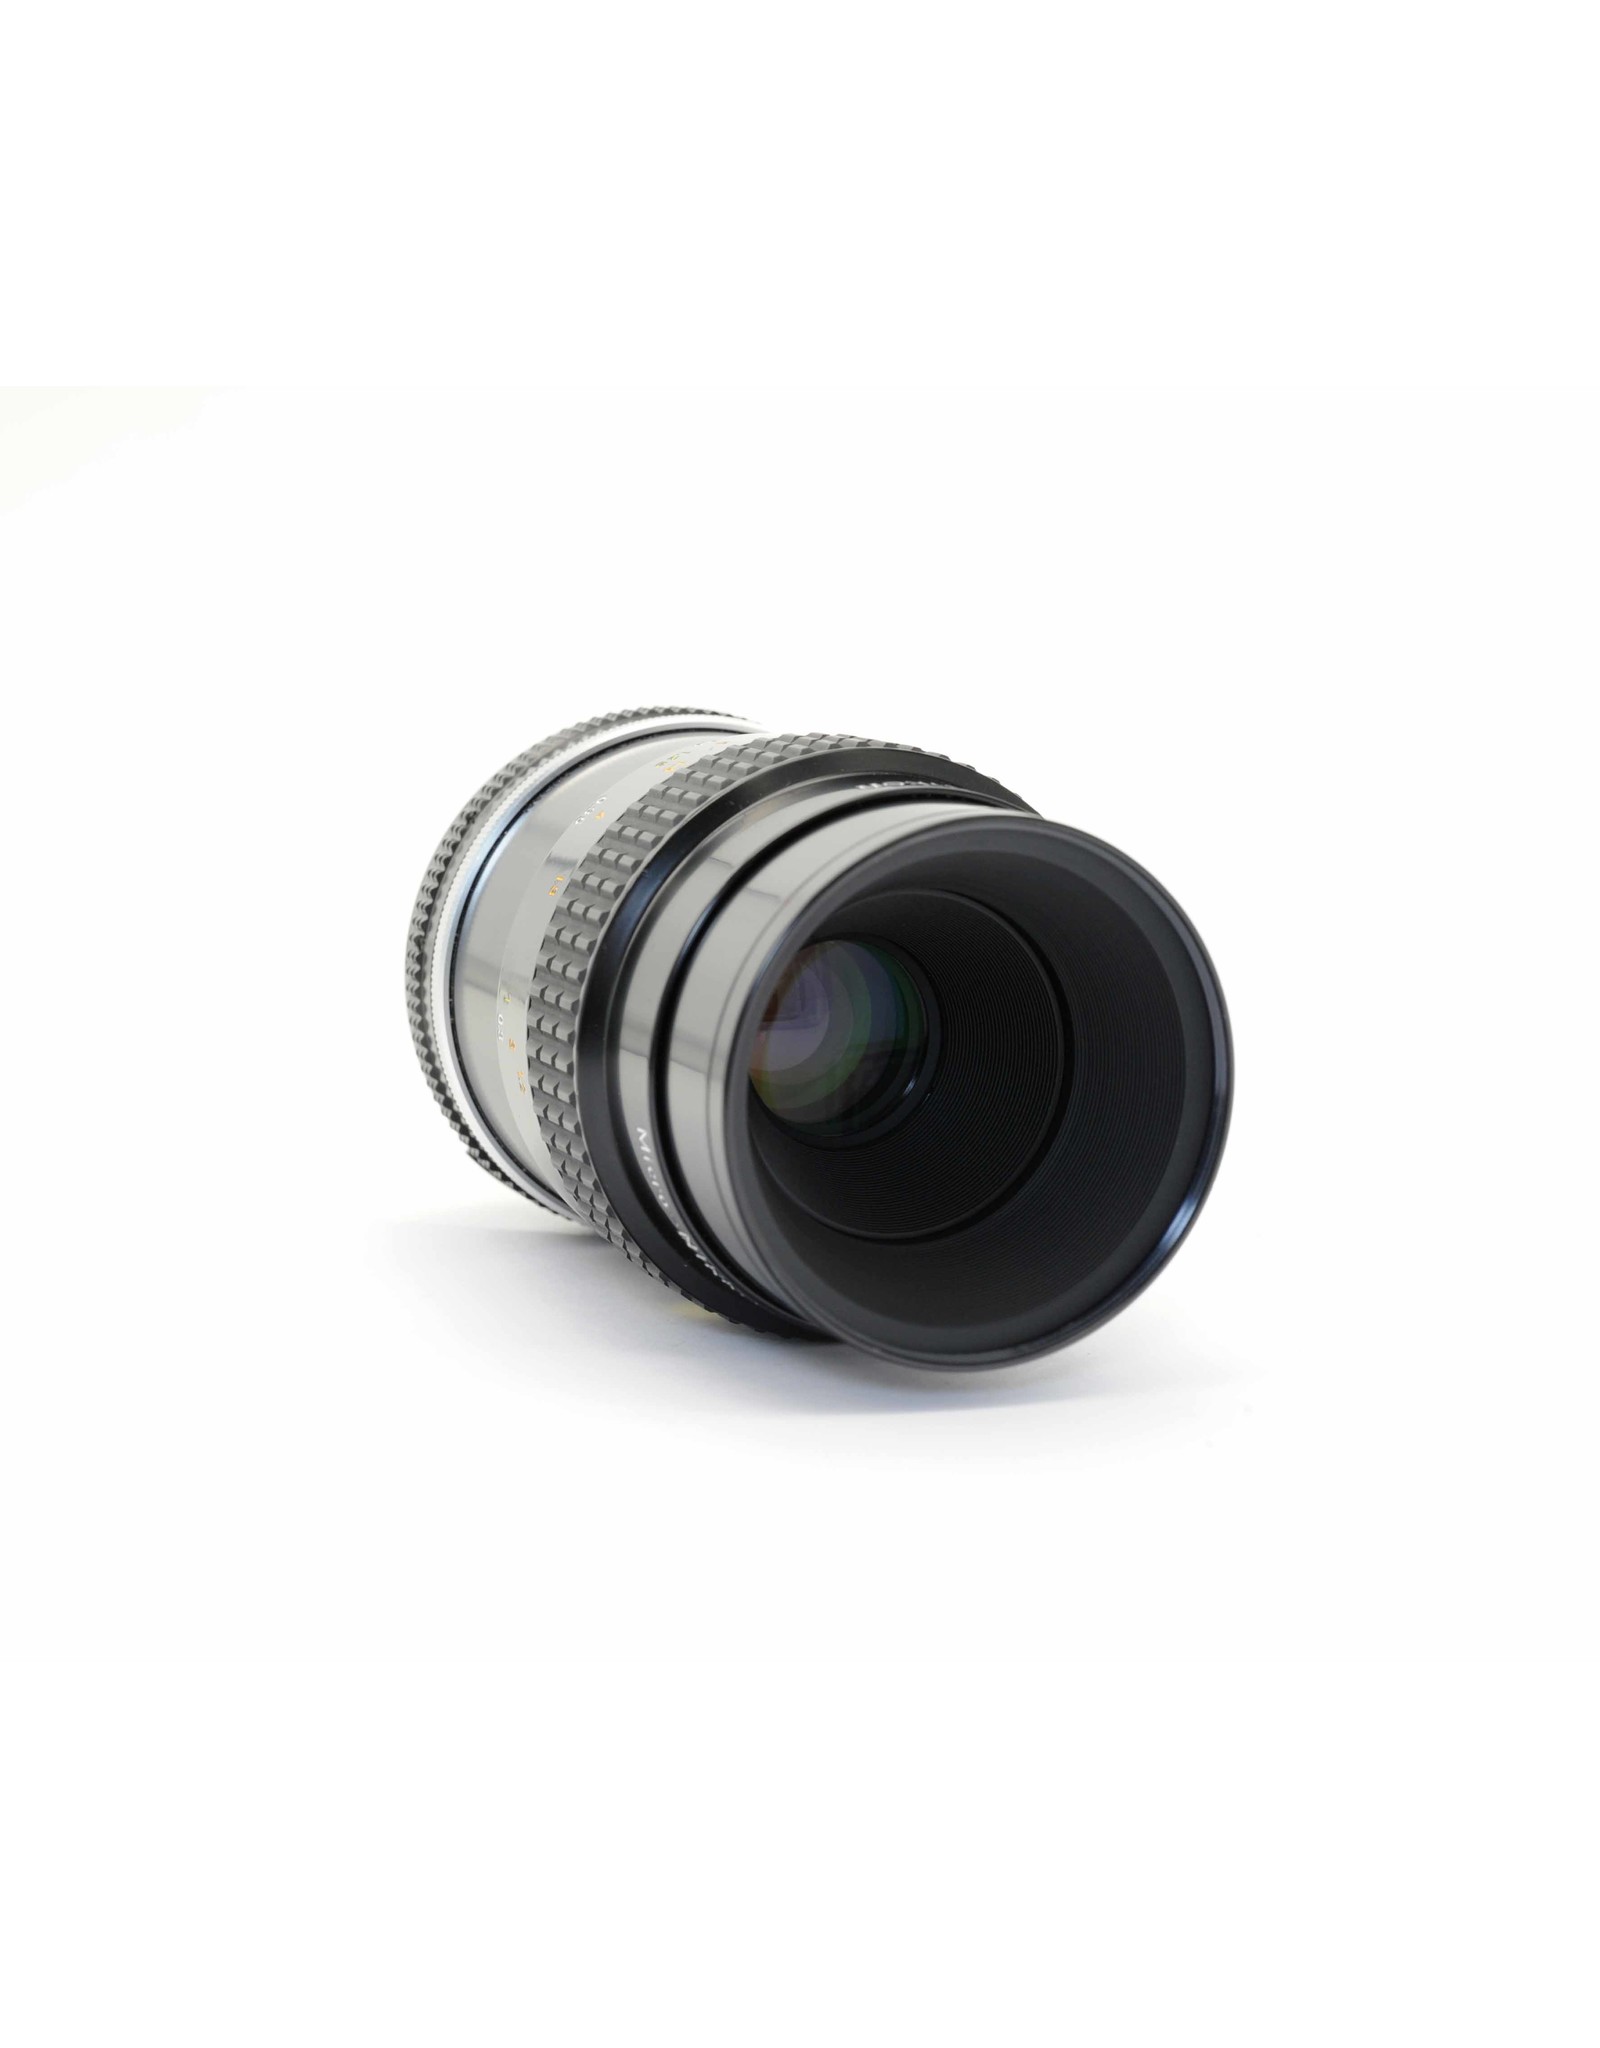 Nikon Nikon 55mm f2.8 Micro AIS   A2110808